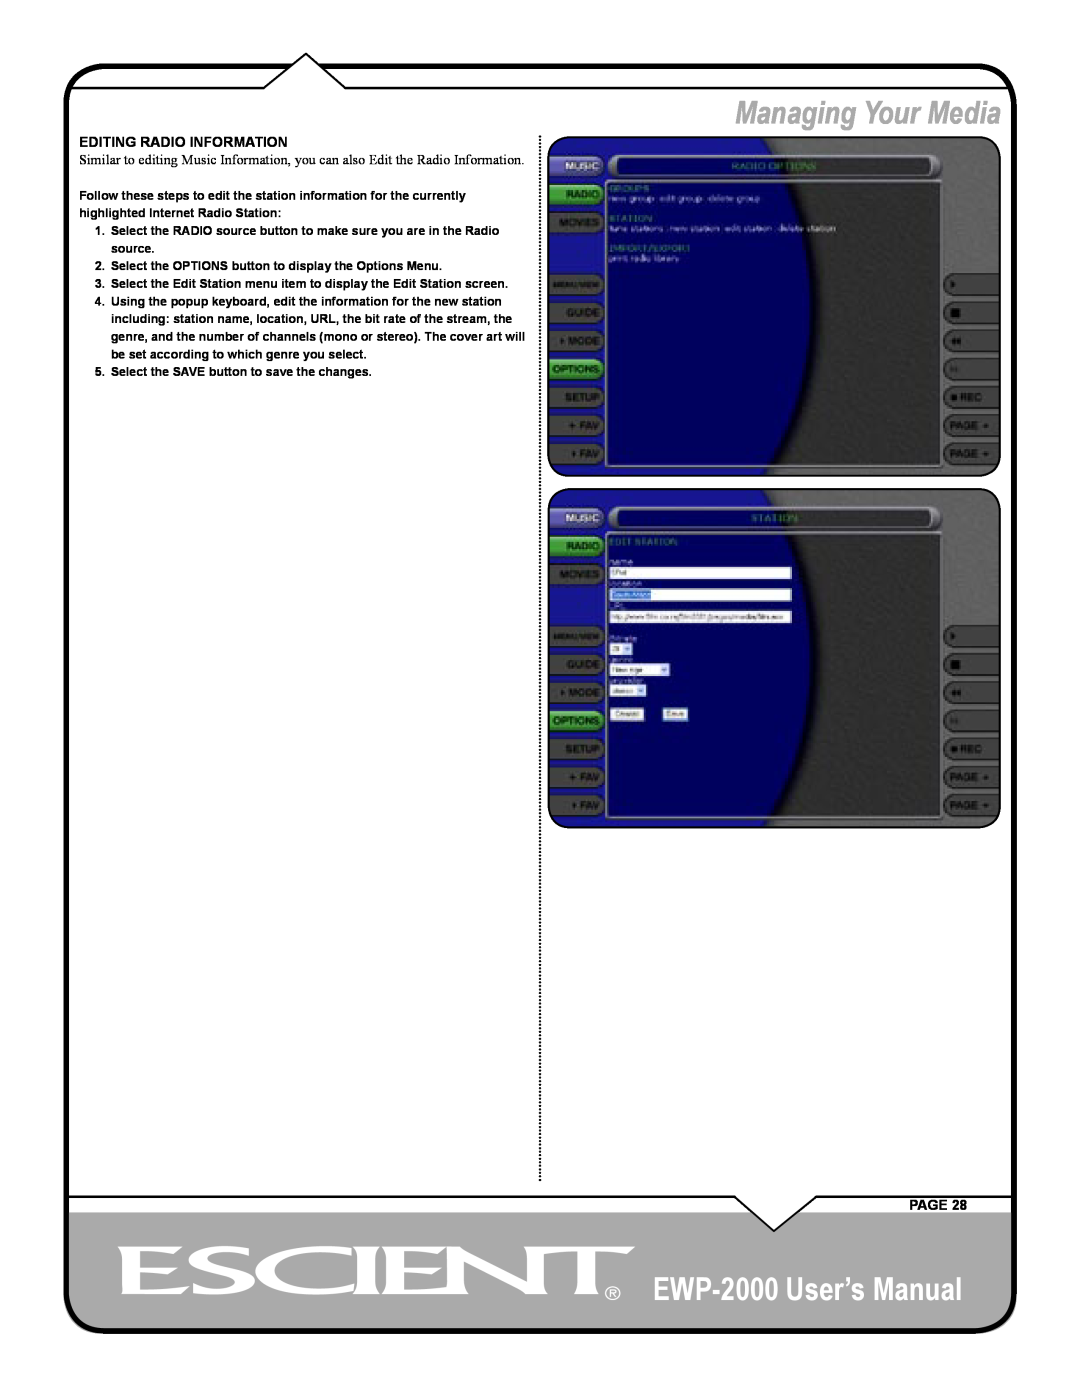 Escient user manual Managing Your Media, EWP-2000 User’s Manual, Editing Radio Information, Page 